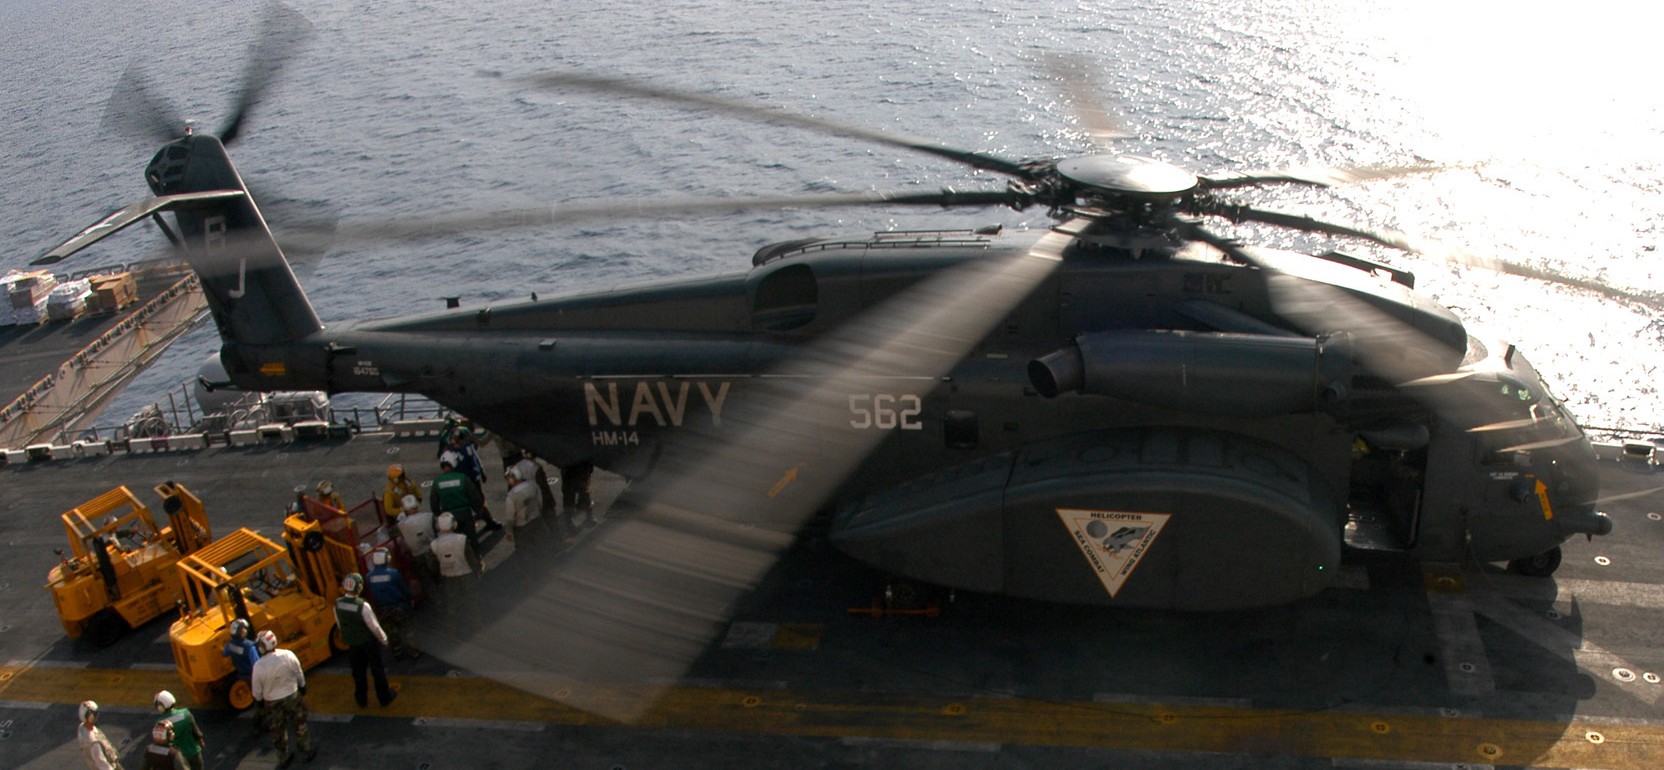 hm-14 vanguard helicopter mine countermeasures squadron navy mh-53e sea dragon 151 uss bataan lhd-5